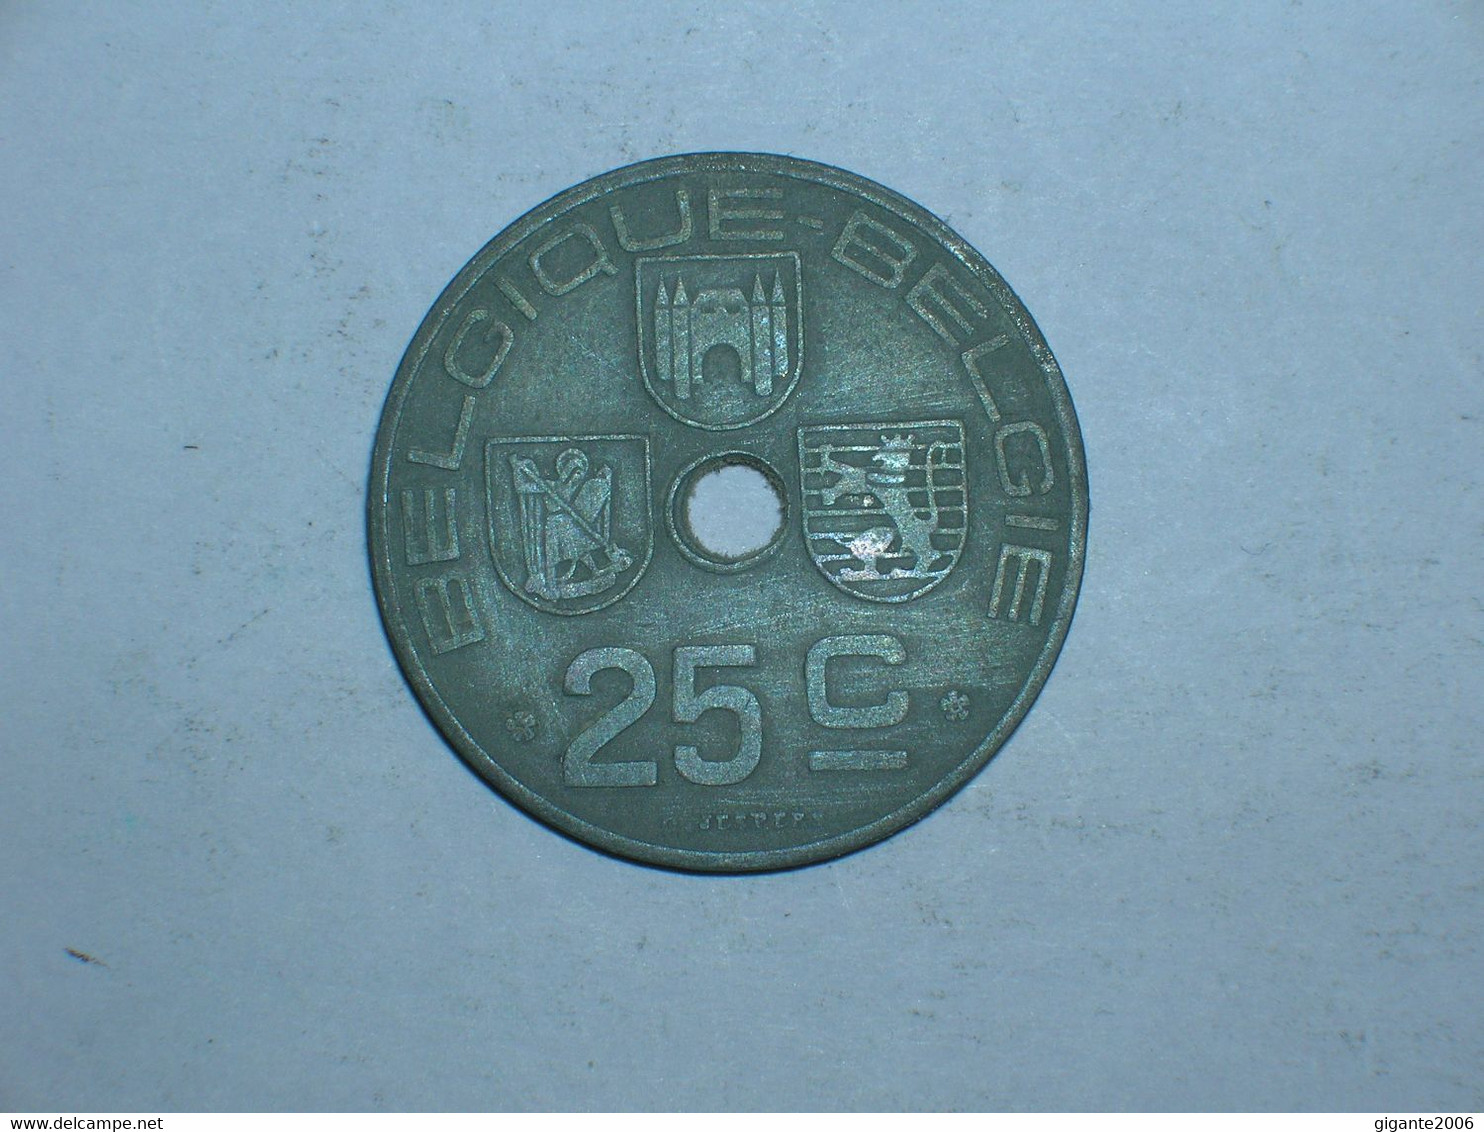 BELGICA 25 CENTIMOS 1946 FR (8981) - 25 Cents